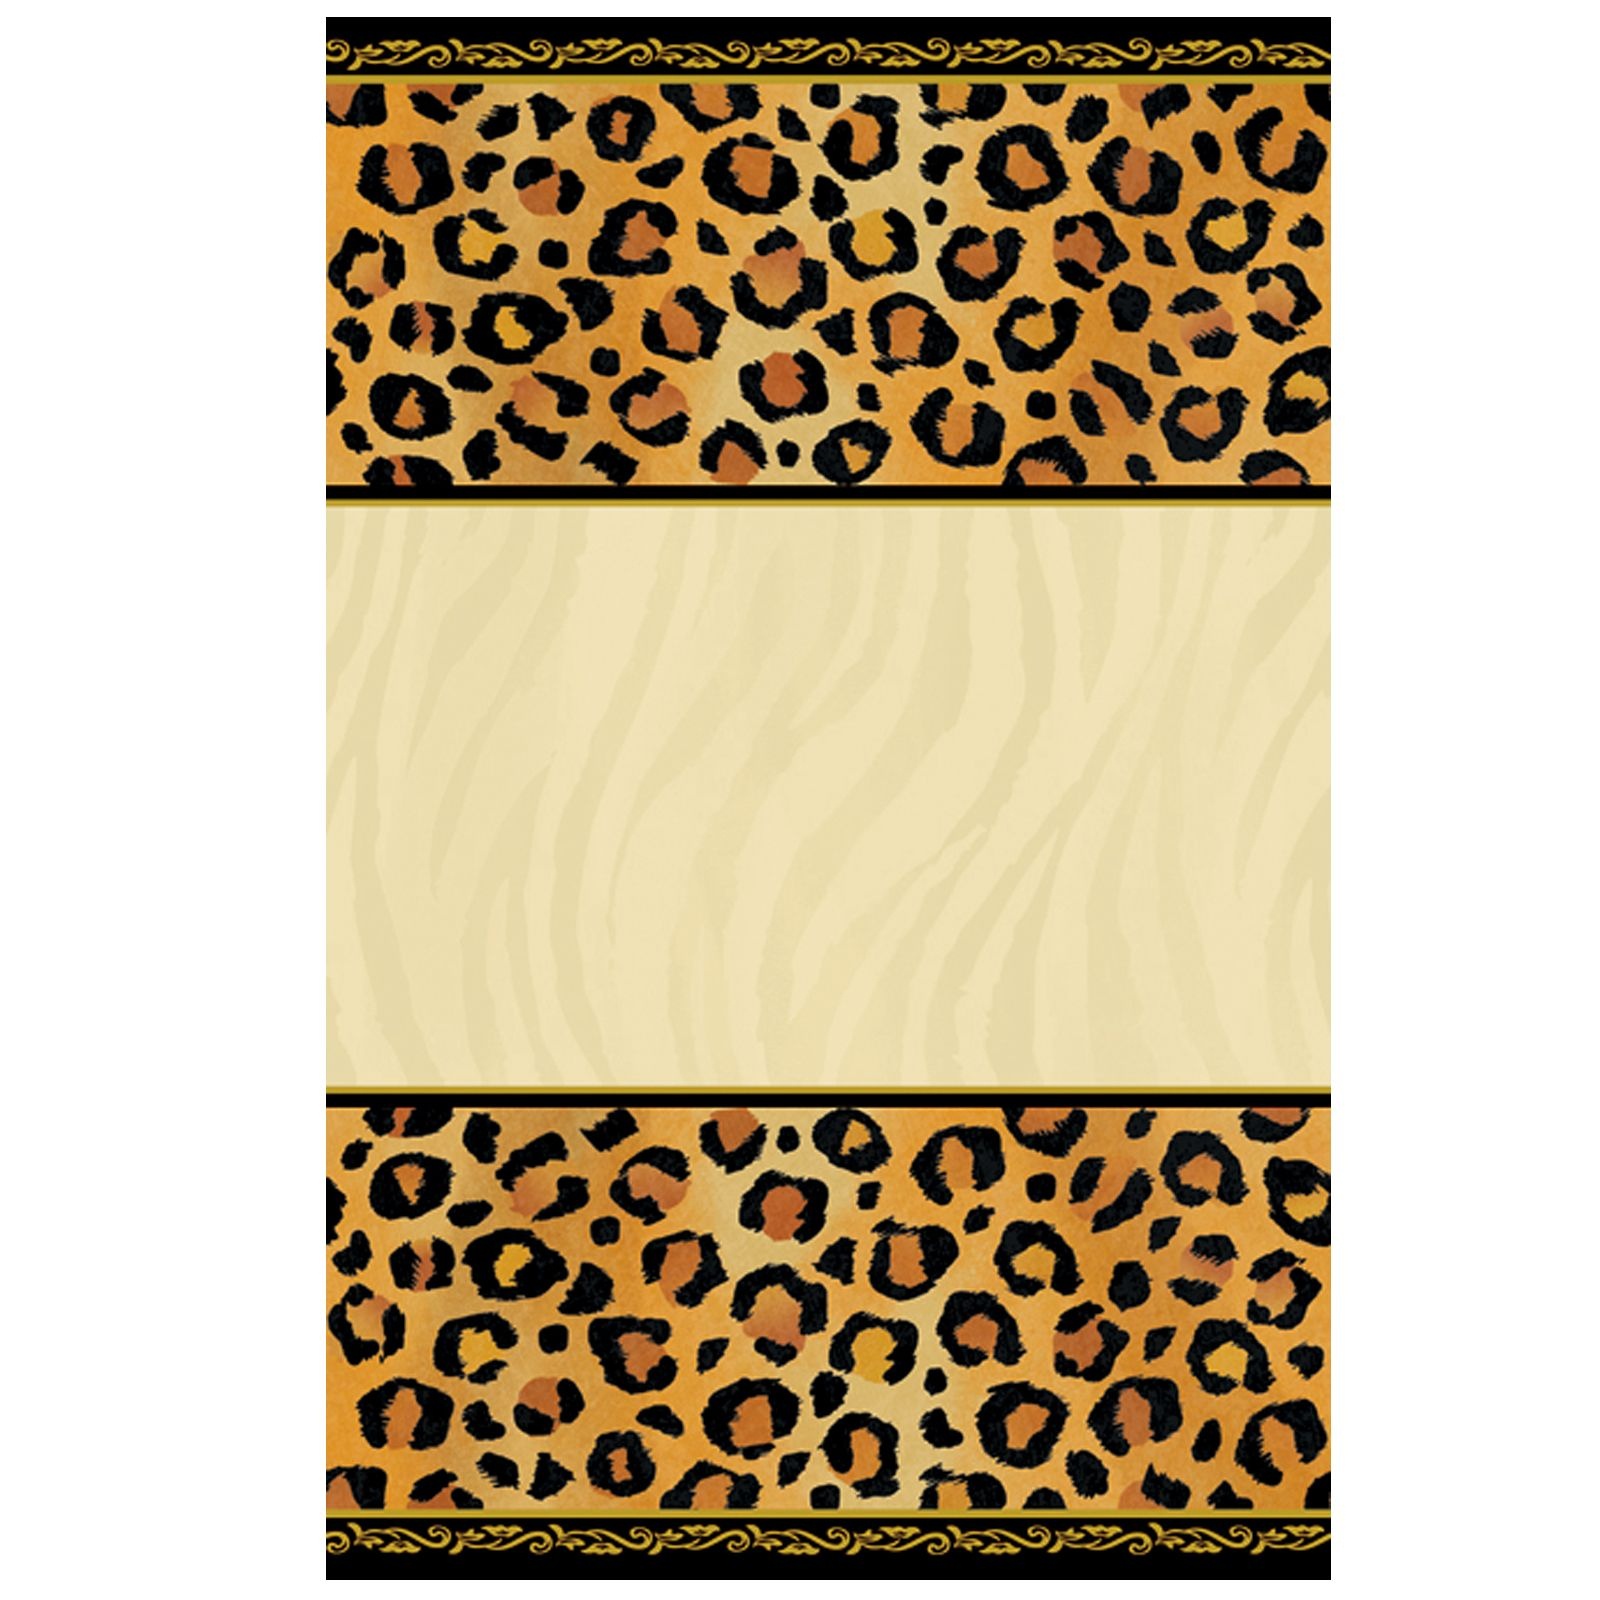 Leopard Print Invitations Printable Free Cakepins | Printables - Free Printable Cheetah Birthday Invitations